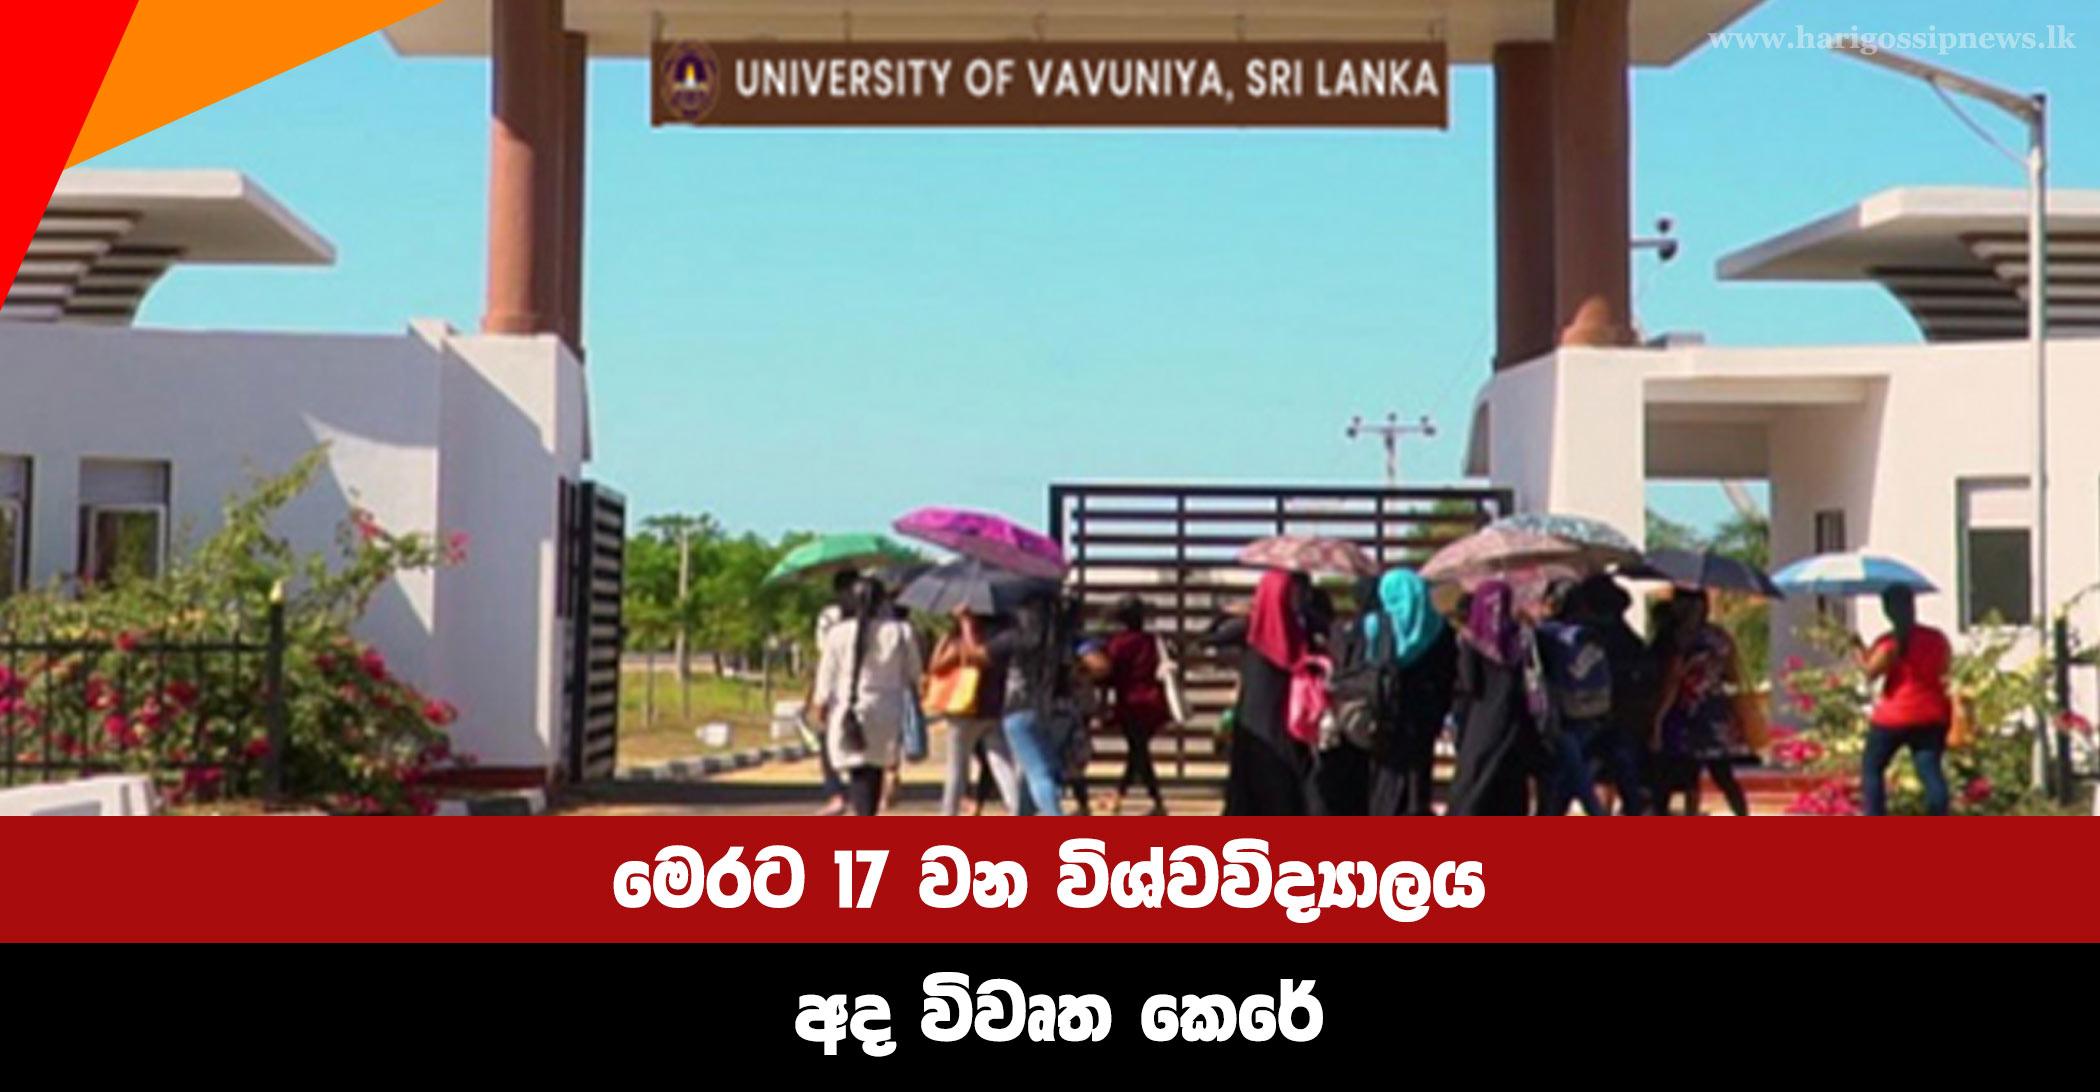 17th University of Sri Lanka opens today